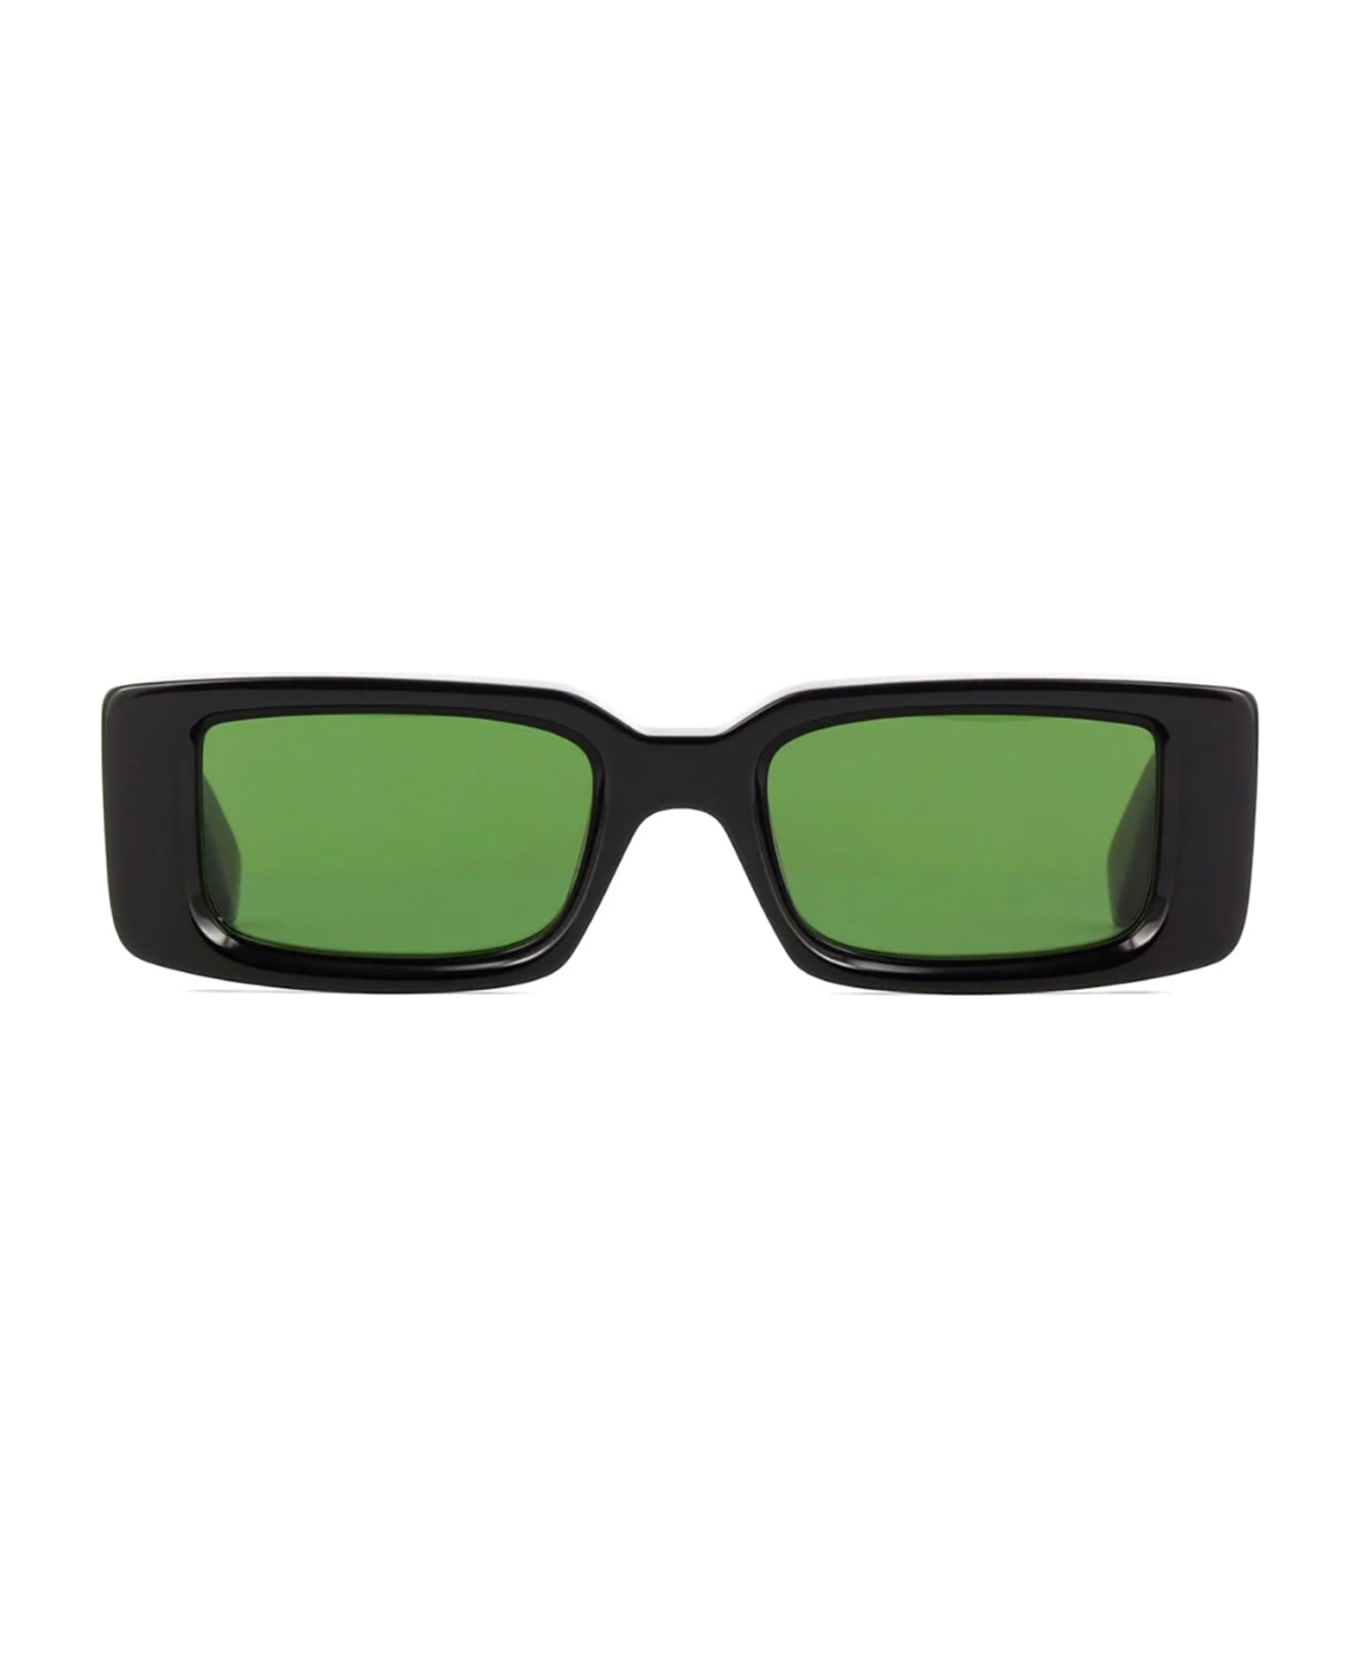 Off-White OERI127 ARTHUR Sunglasses - Black